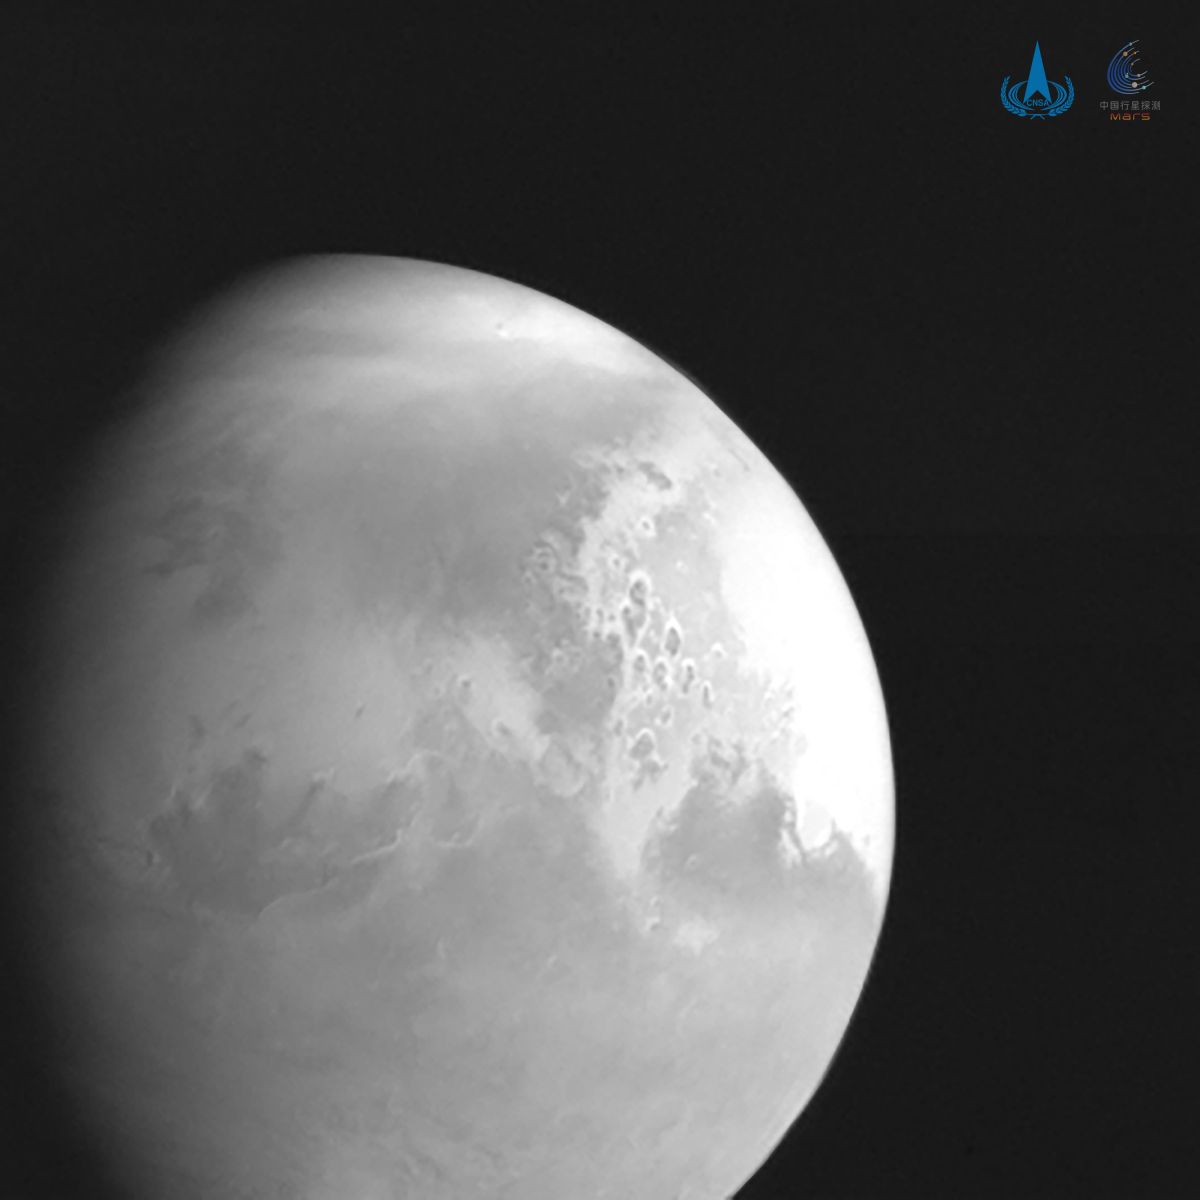 La sonde chinoise Tianwen-1 livre son premier cliché de Mars